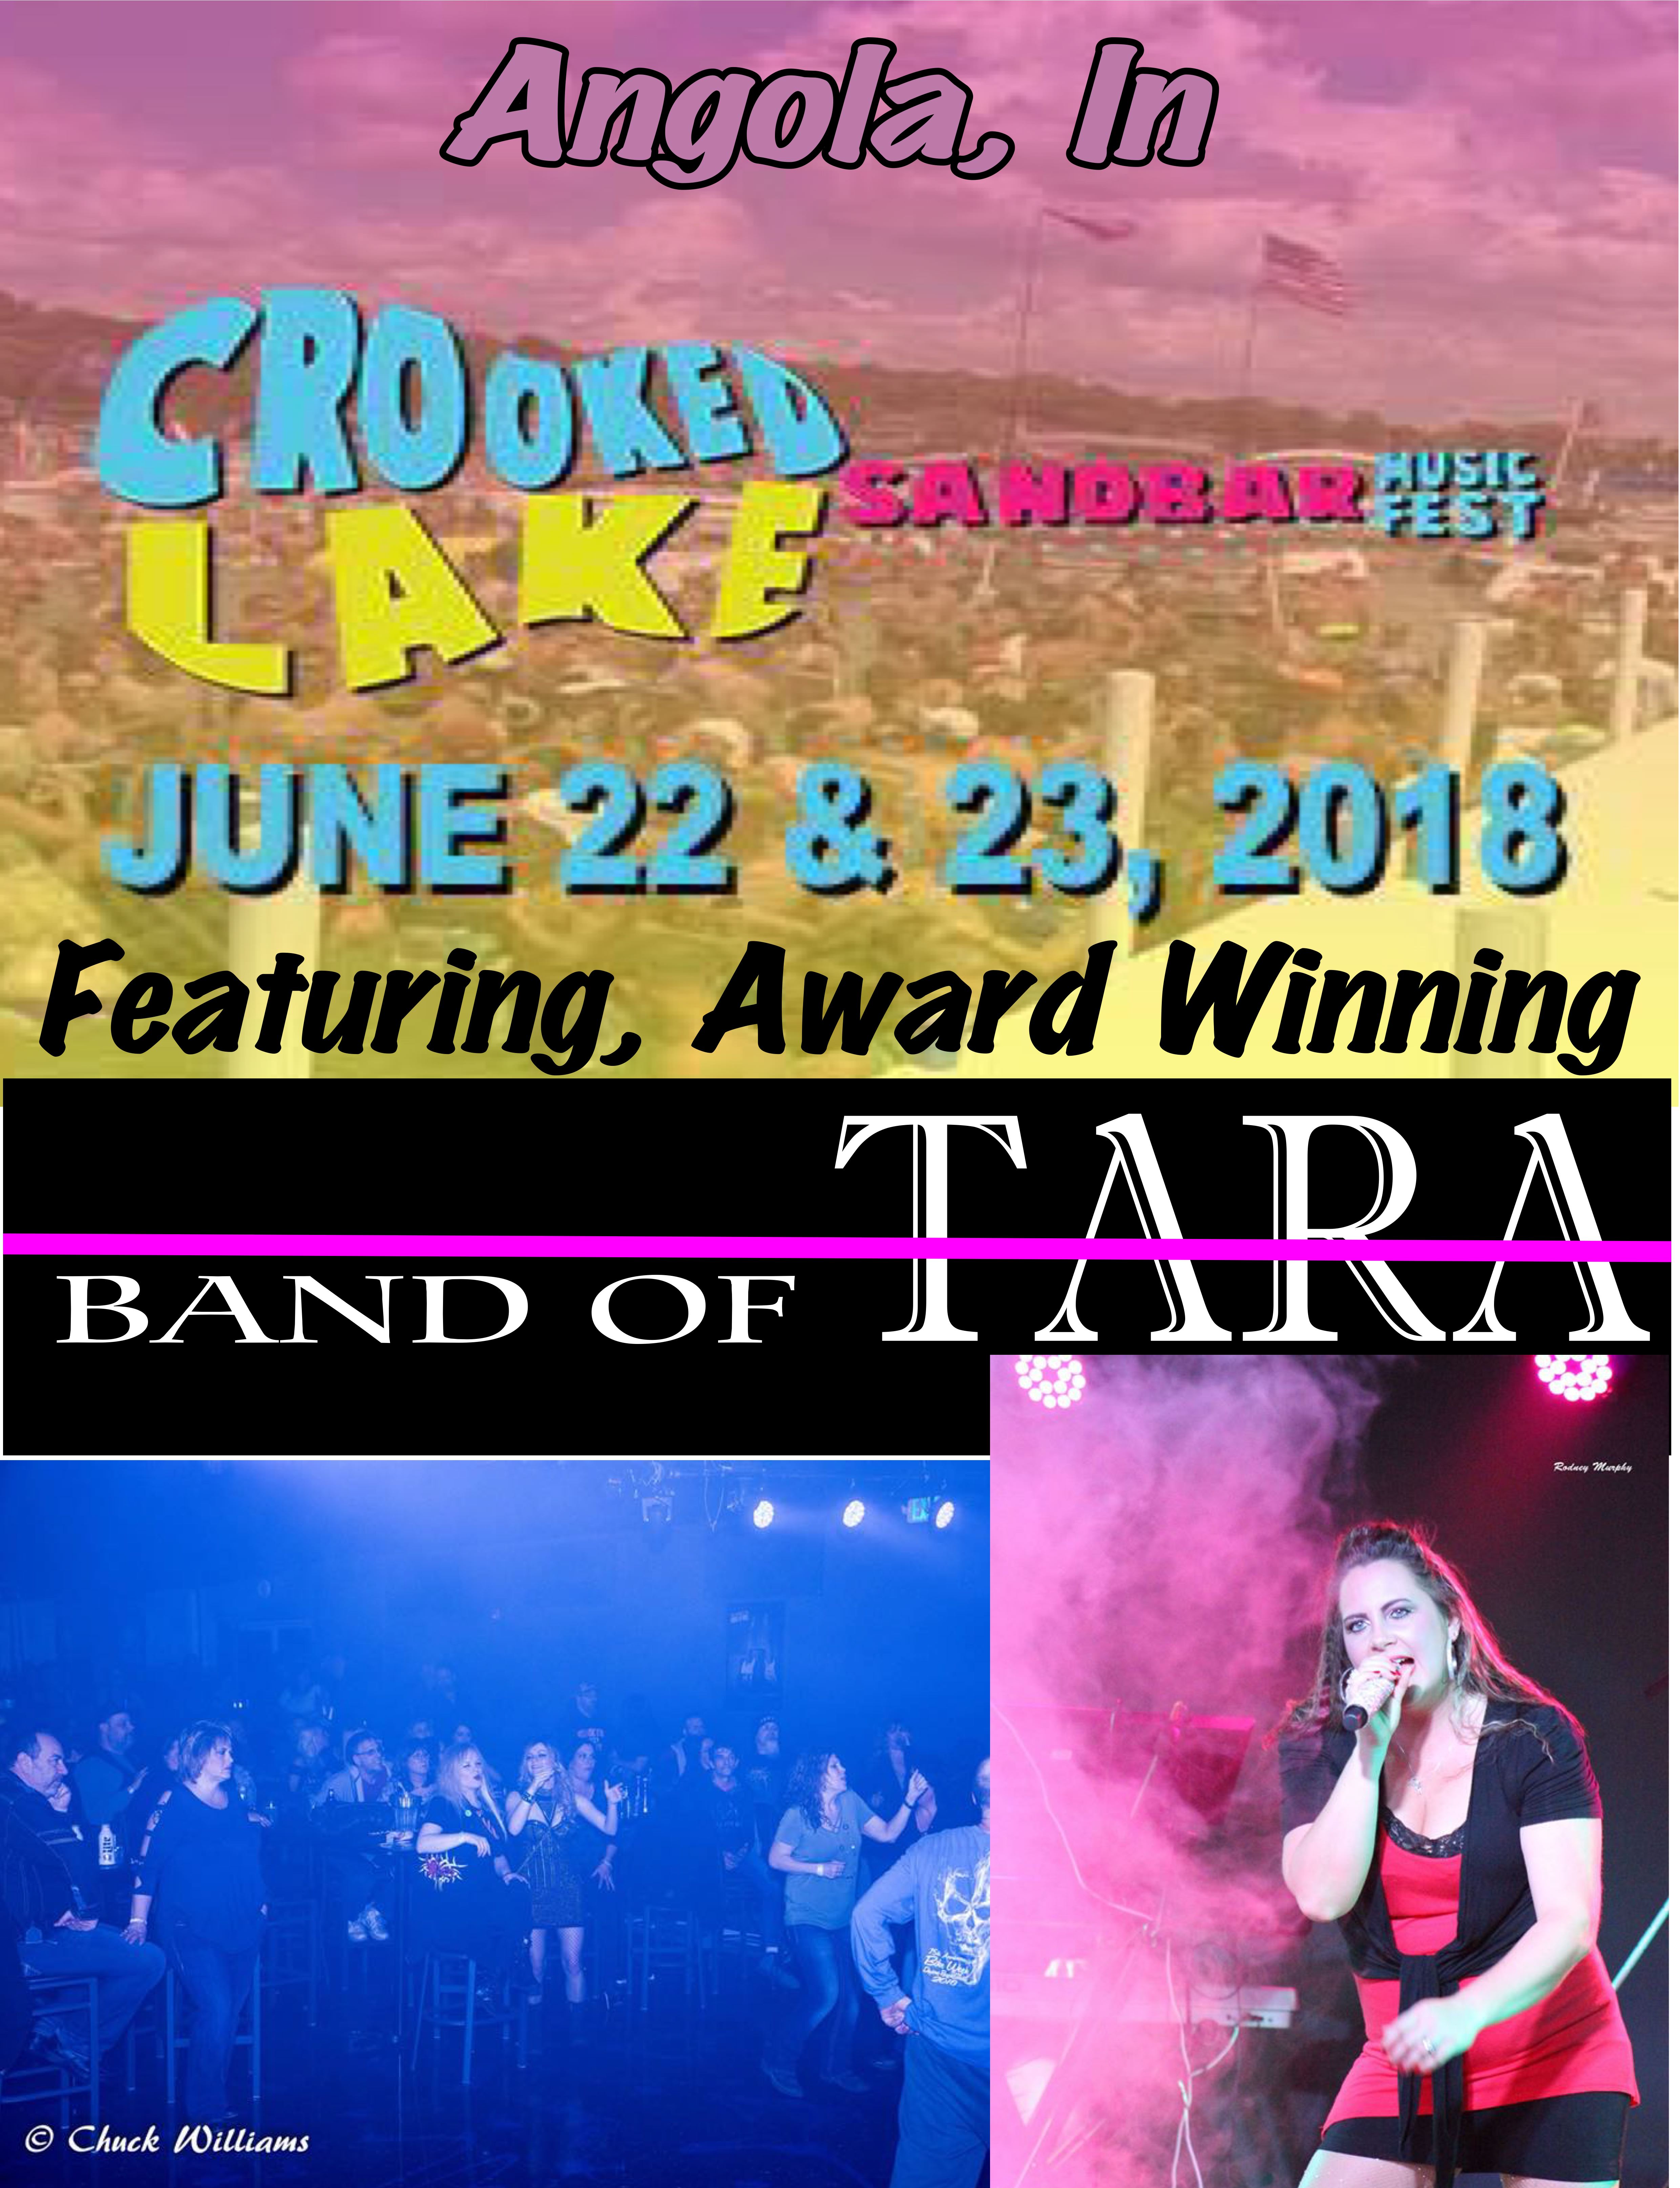 Band of Tara Crooked Lake Sandbar Music Festival